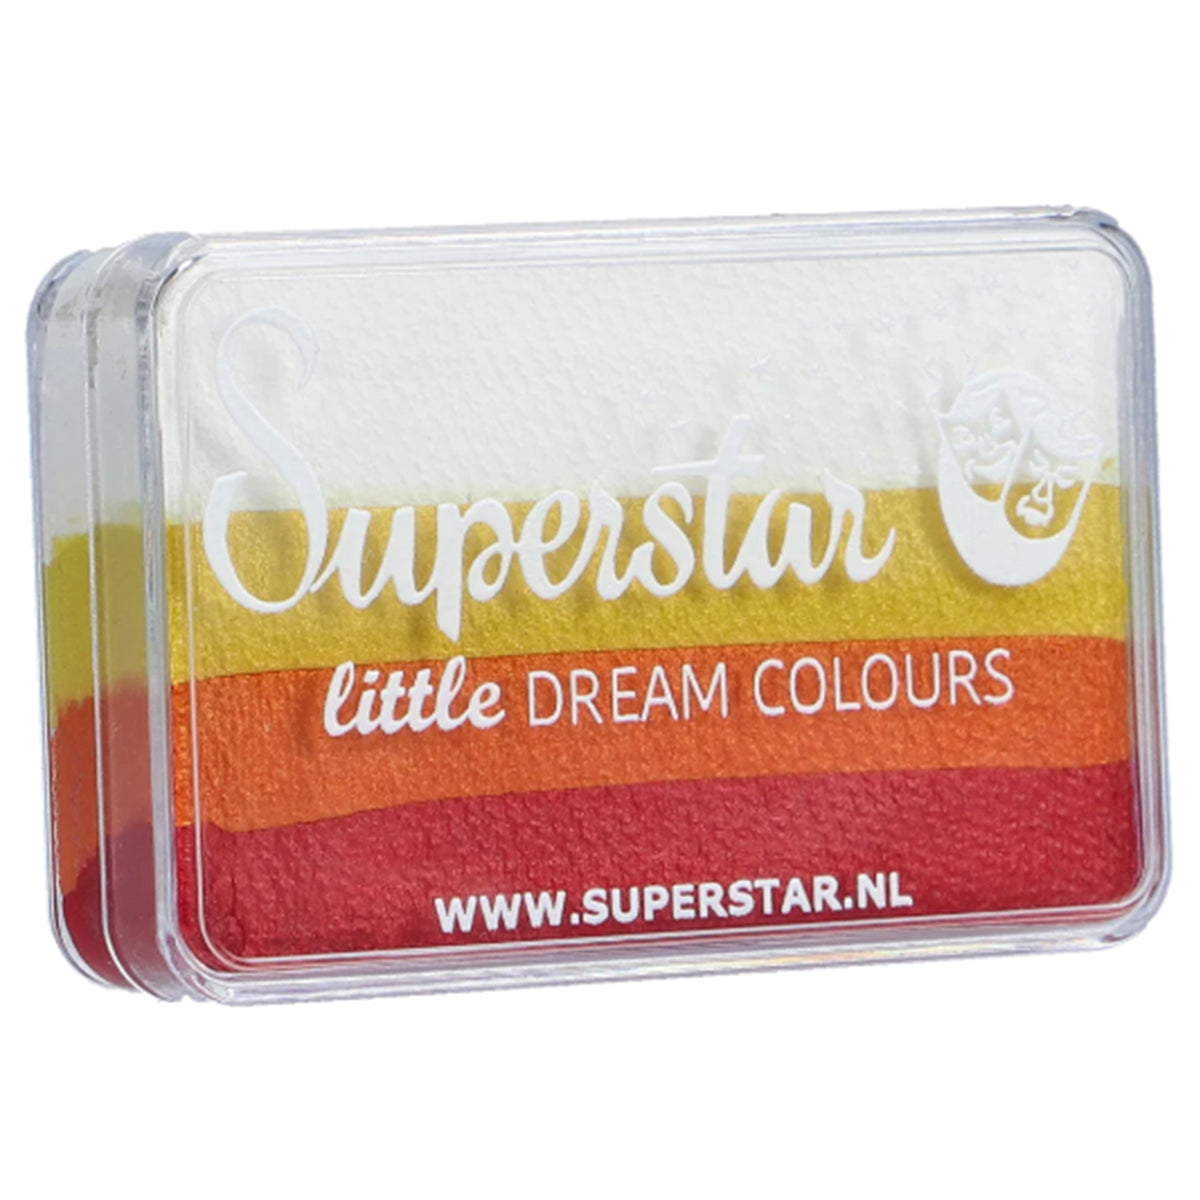 Superstar Dream Colours Rainbow Cake - Little Magic Sunrise (1.06 oz/30 gm)